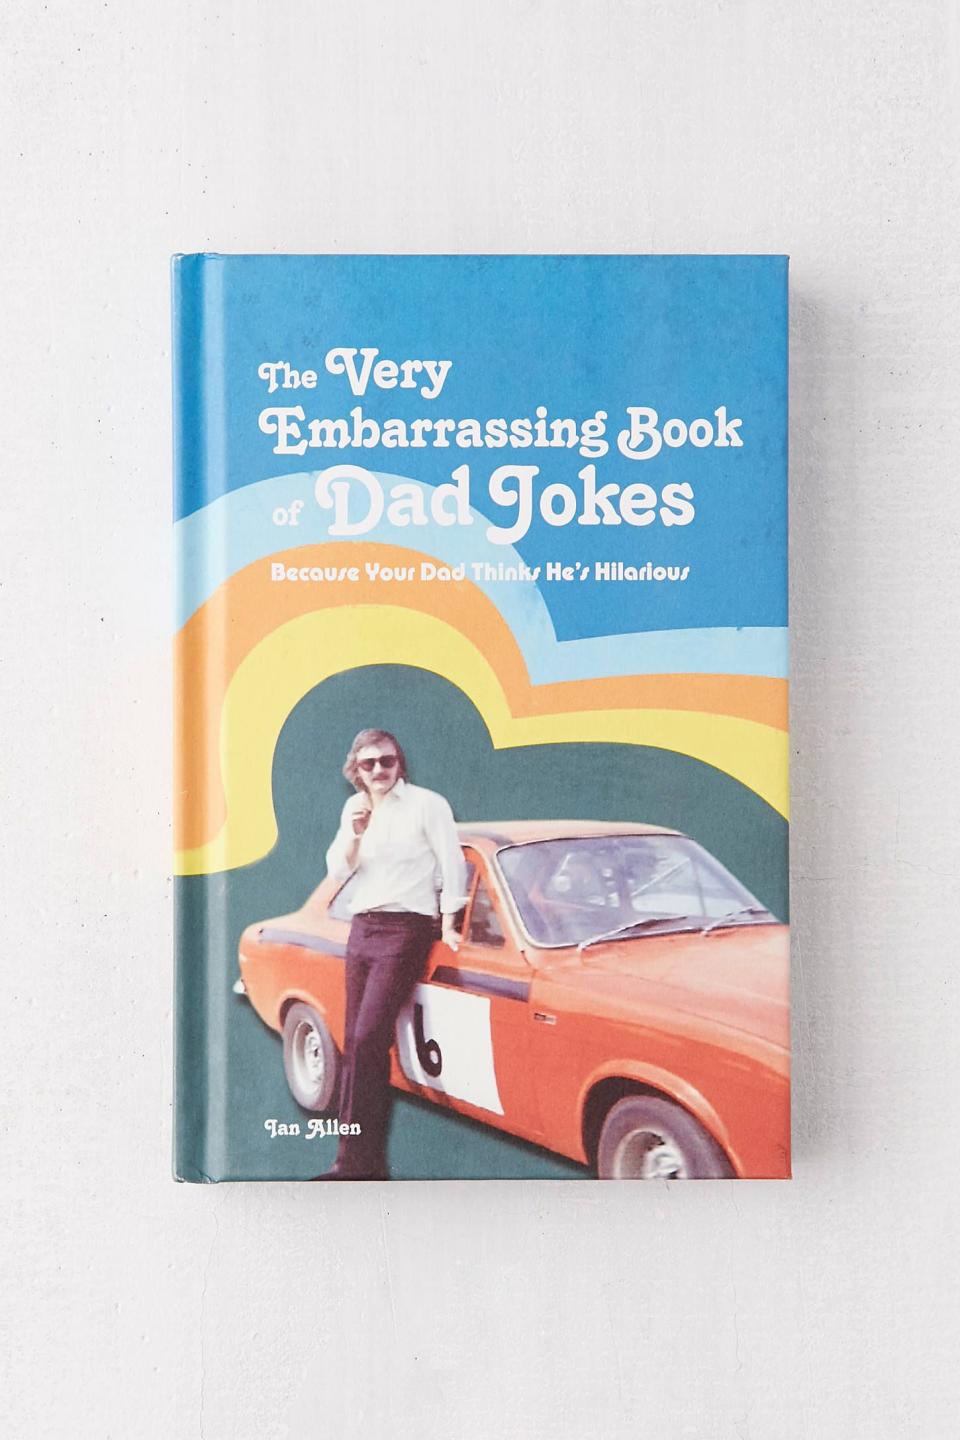 "The Very Embarrassing Book of Dad Jokes" By Ian Allen